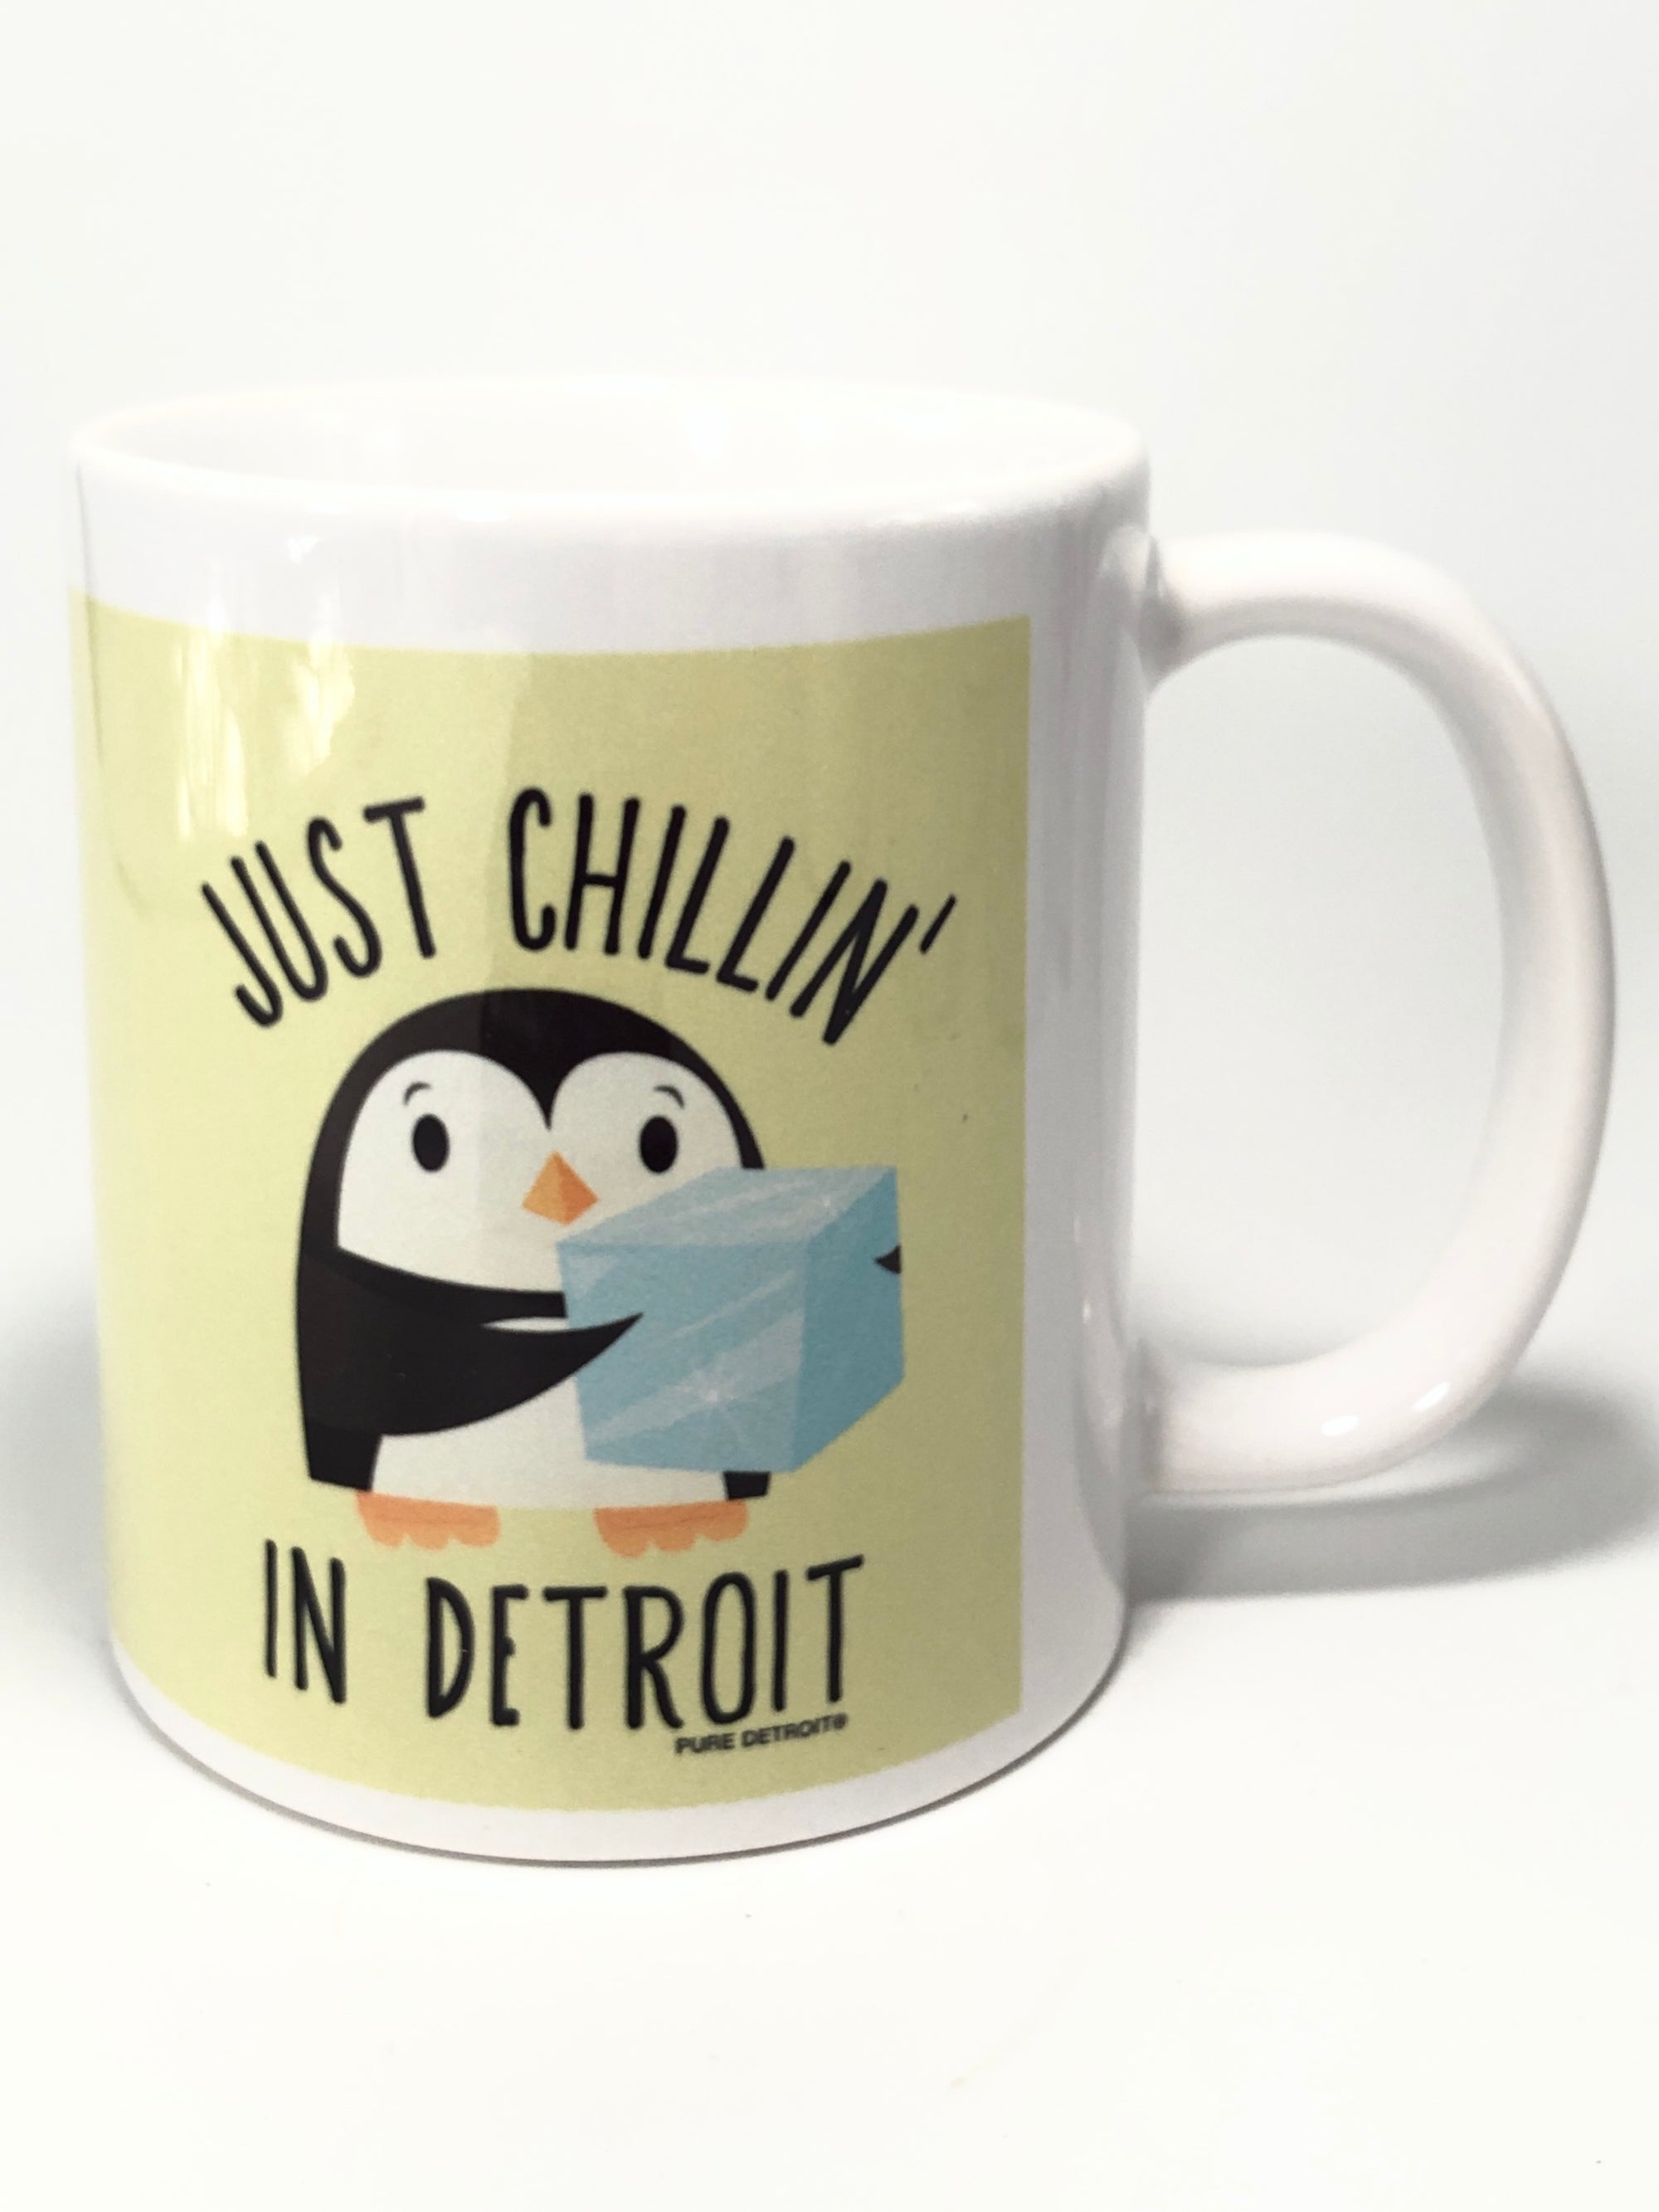 Just Chillin' in Detroit 11 oz Coffee Mug glass   